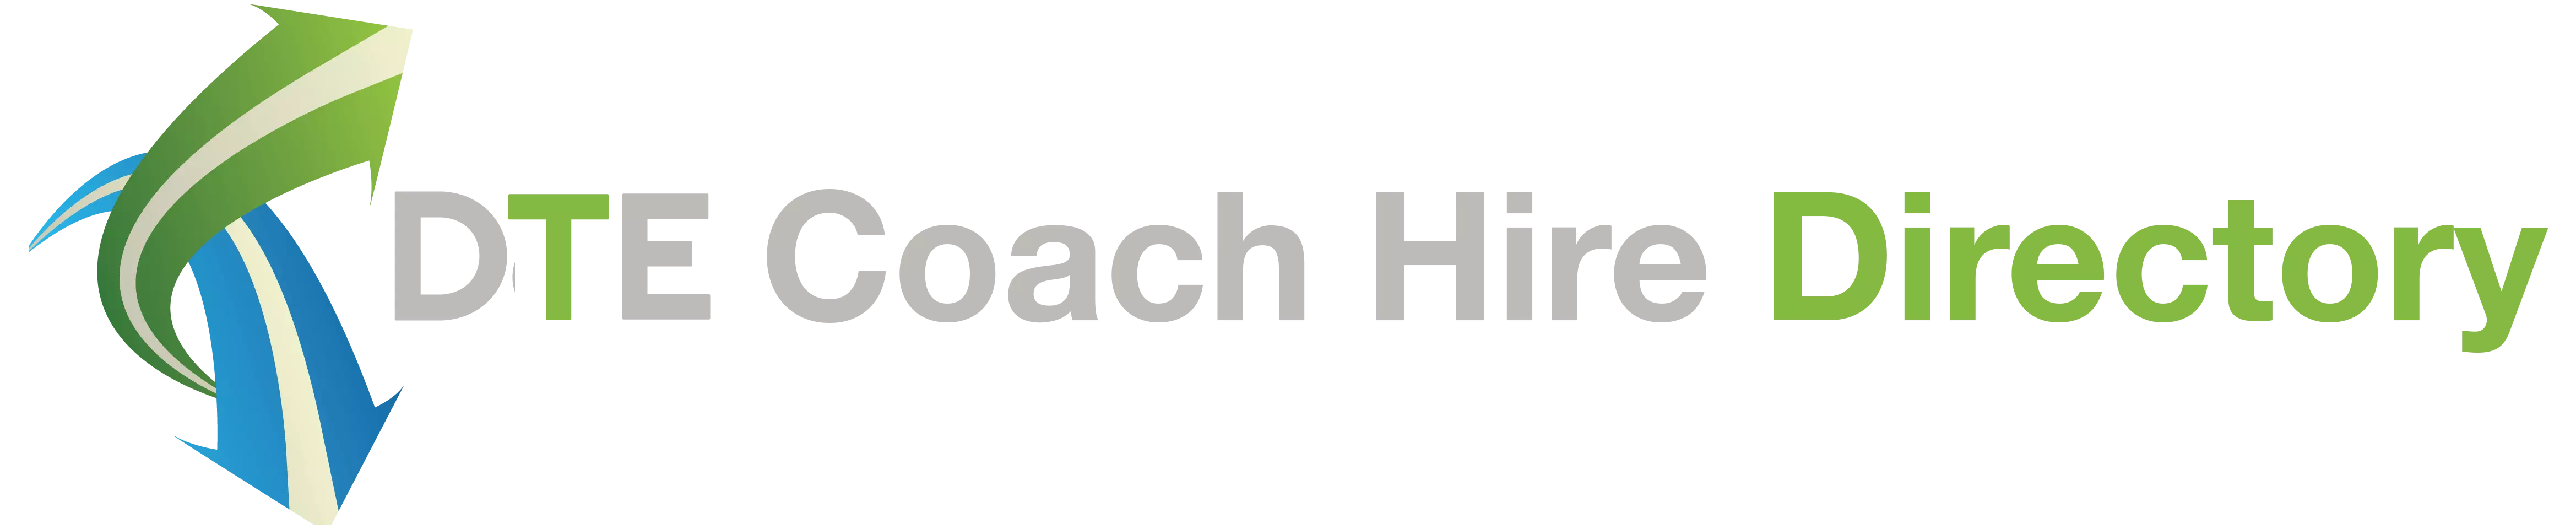 Coach Hire Directory - Logo